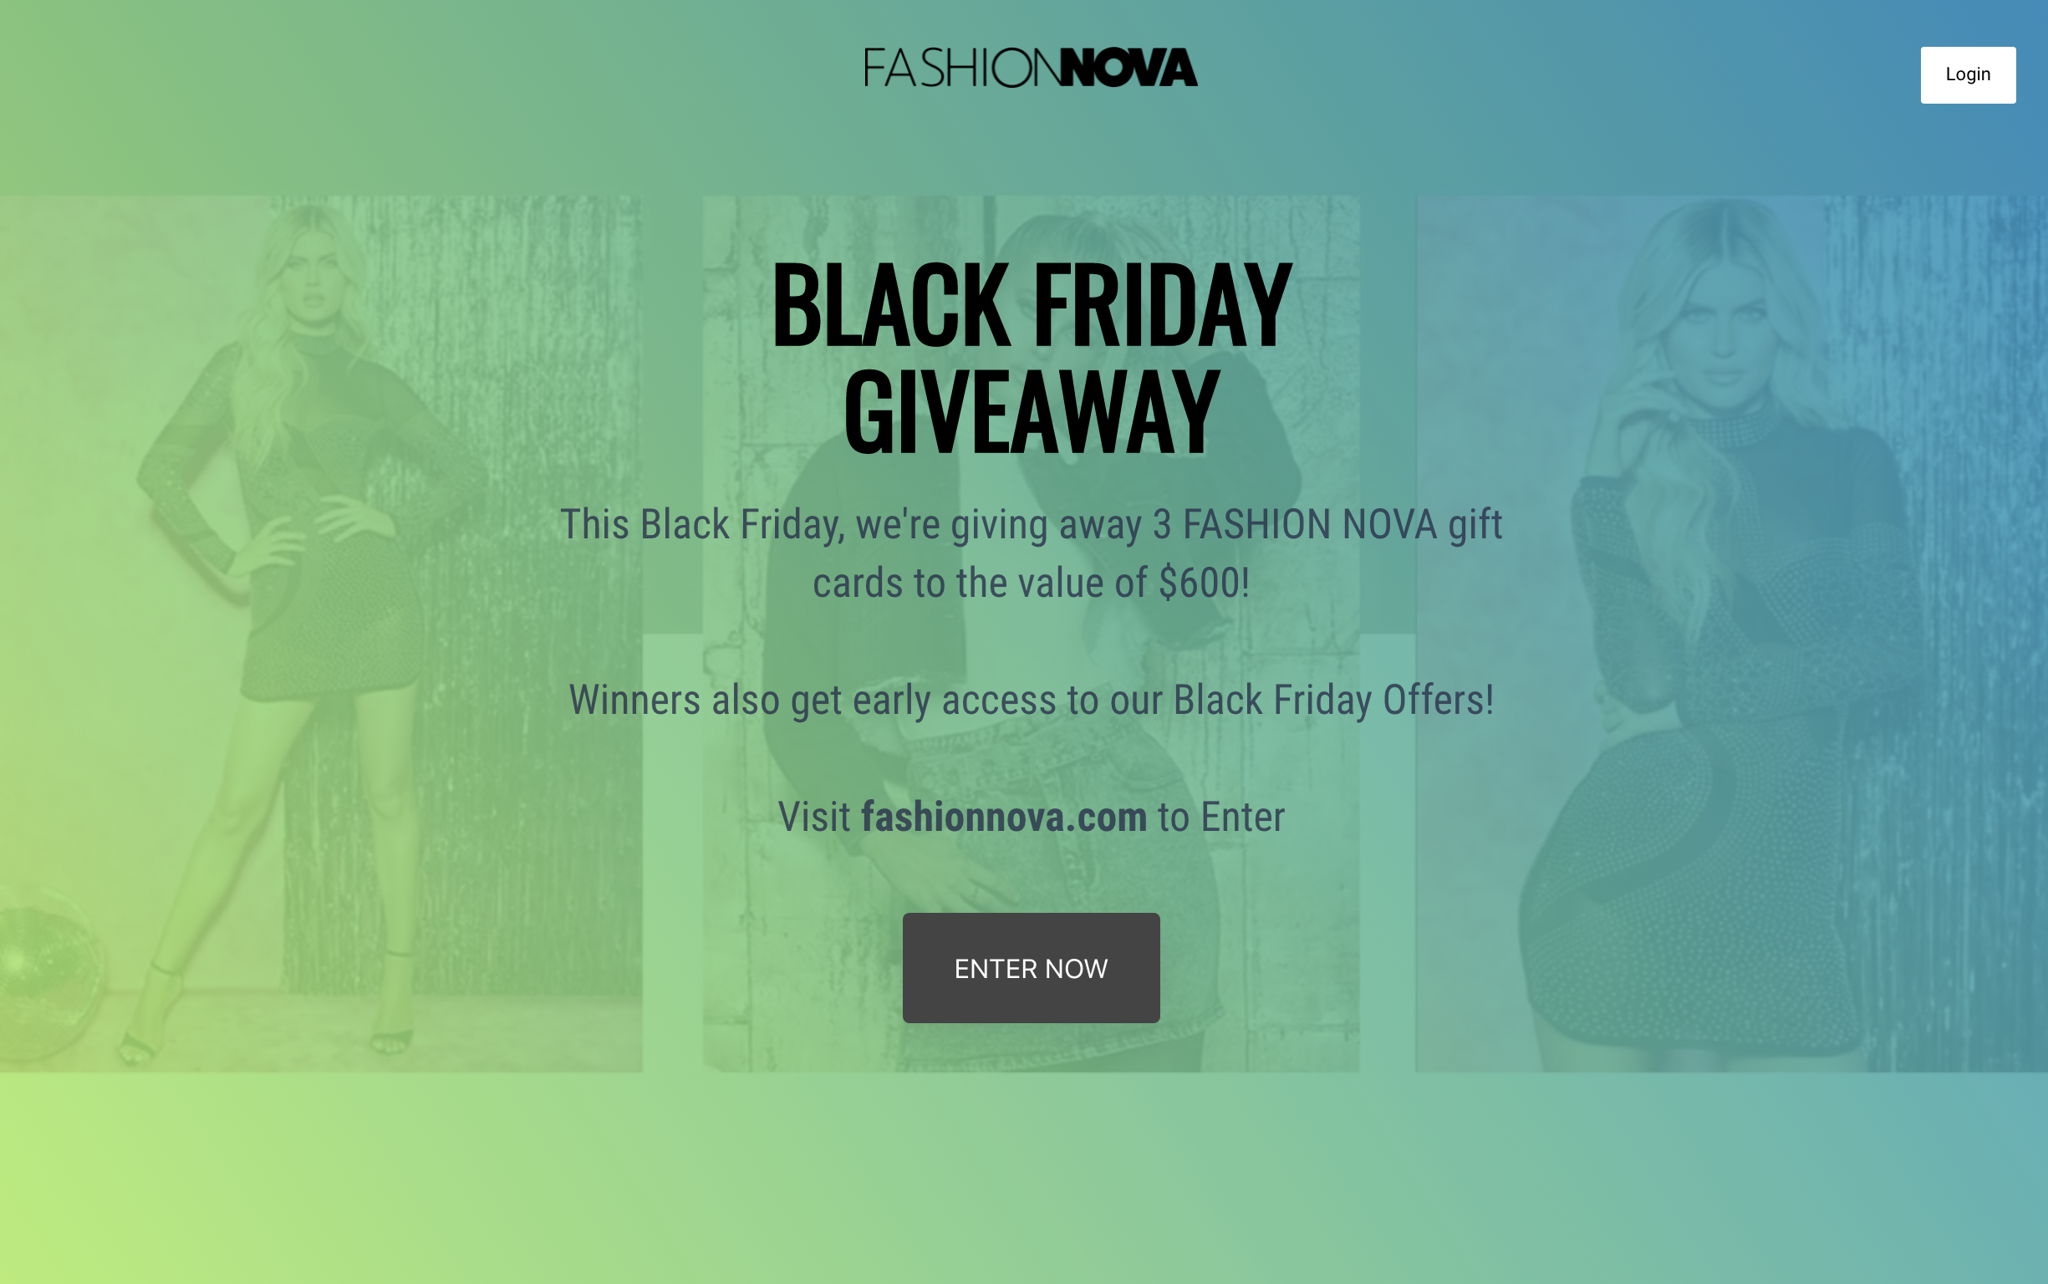 Fashion Nova Black Friday Giveaway